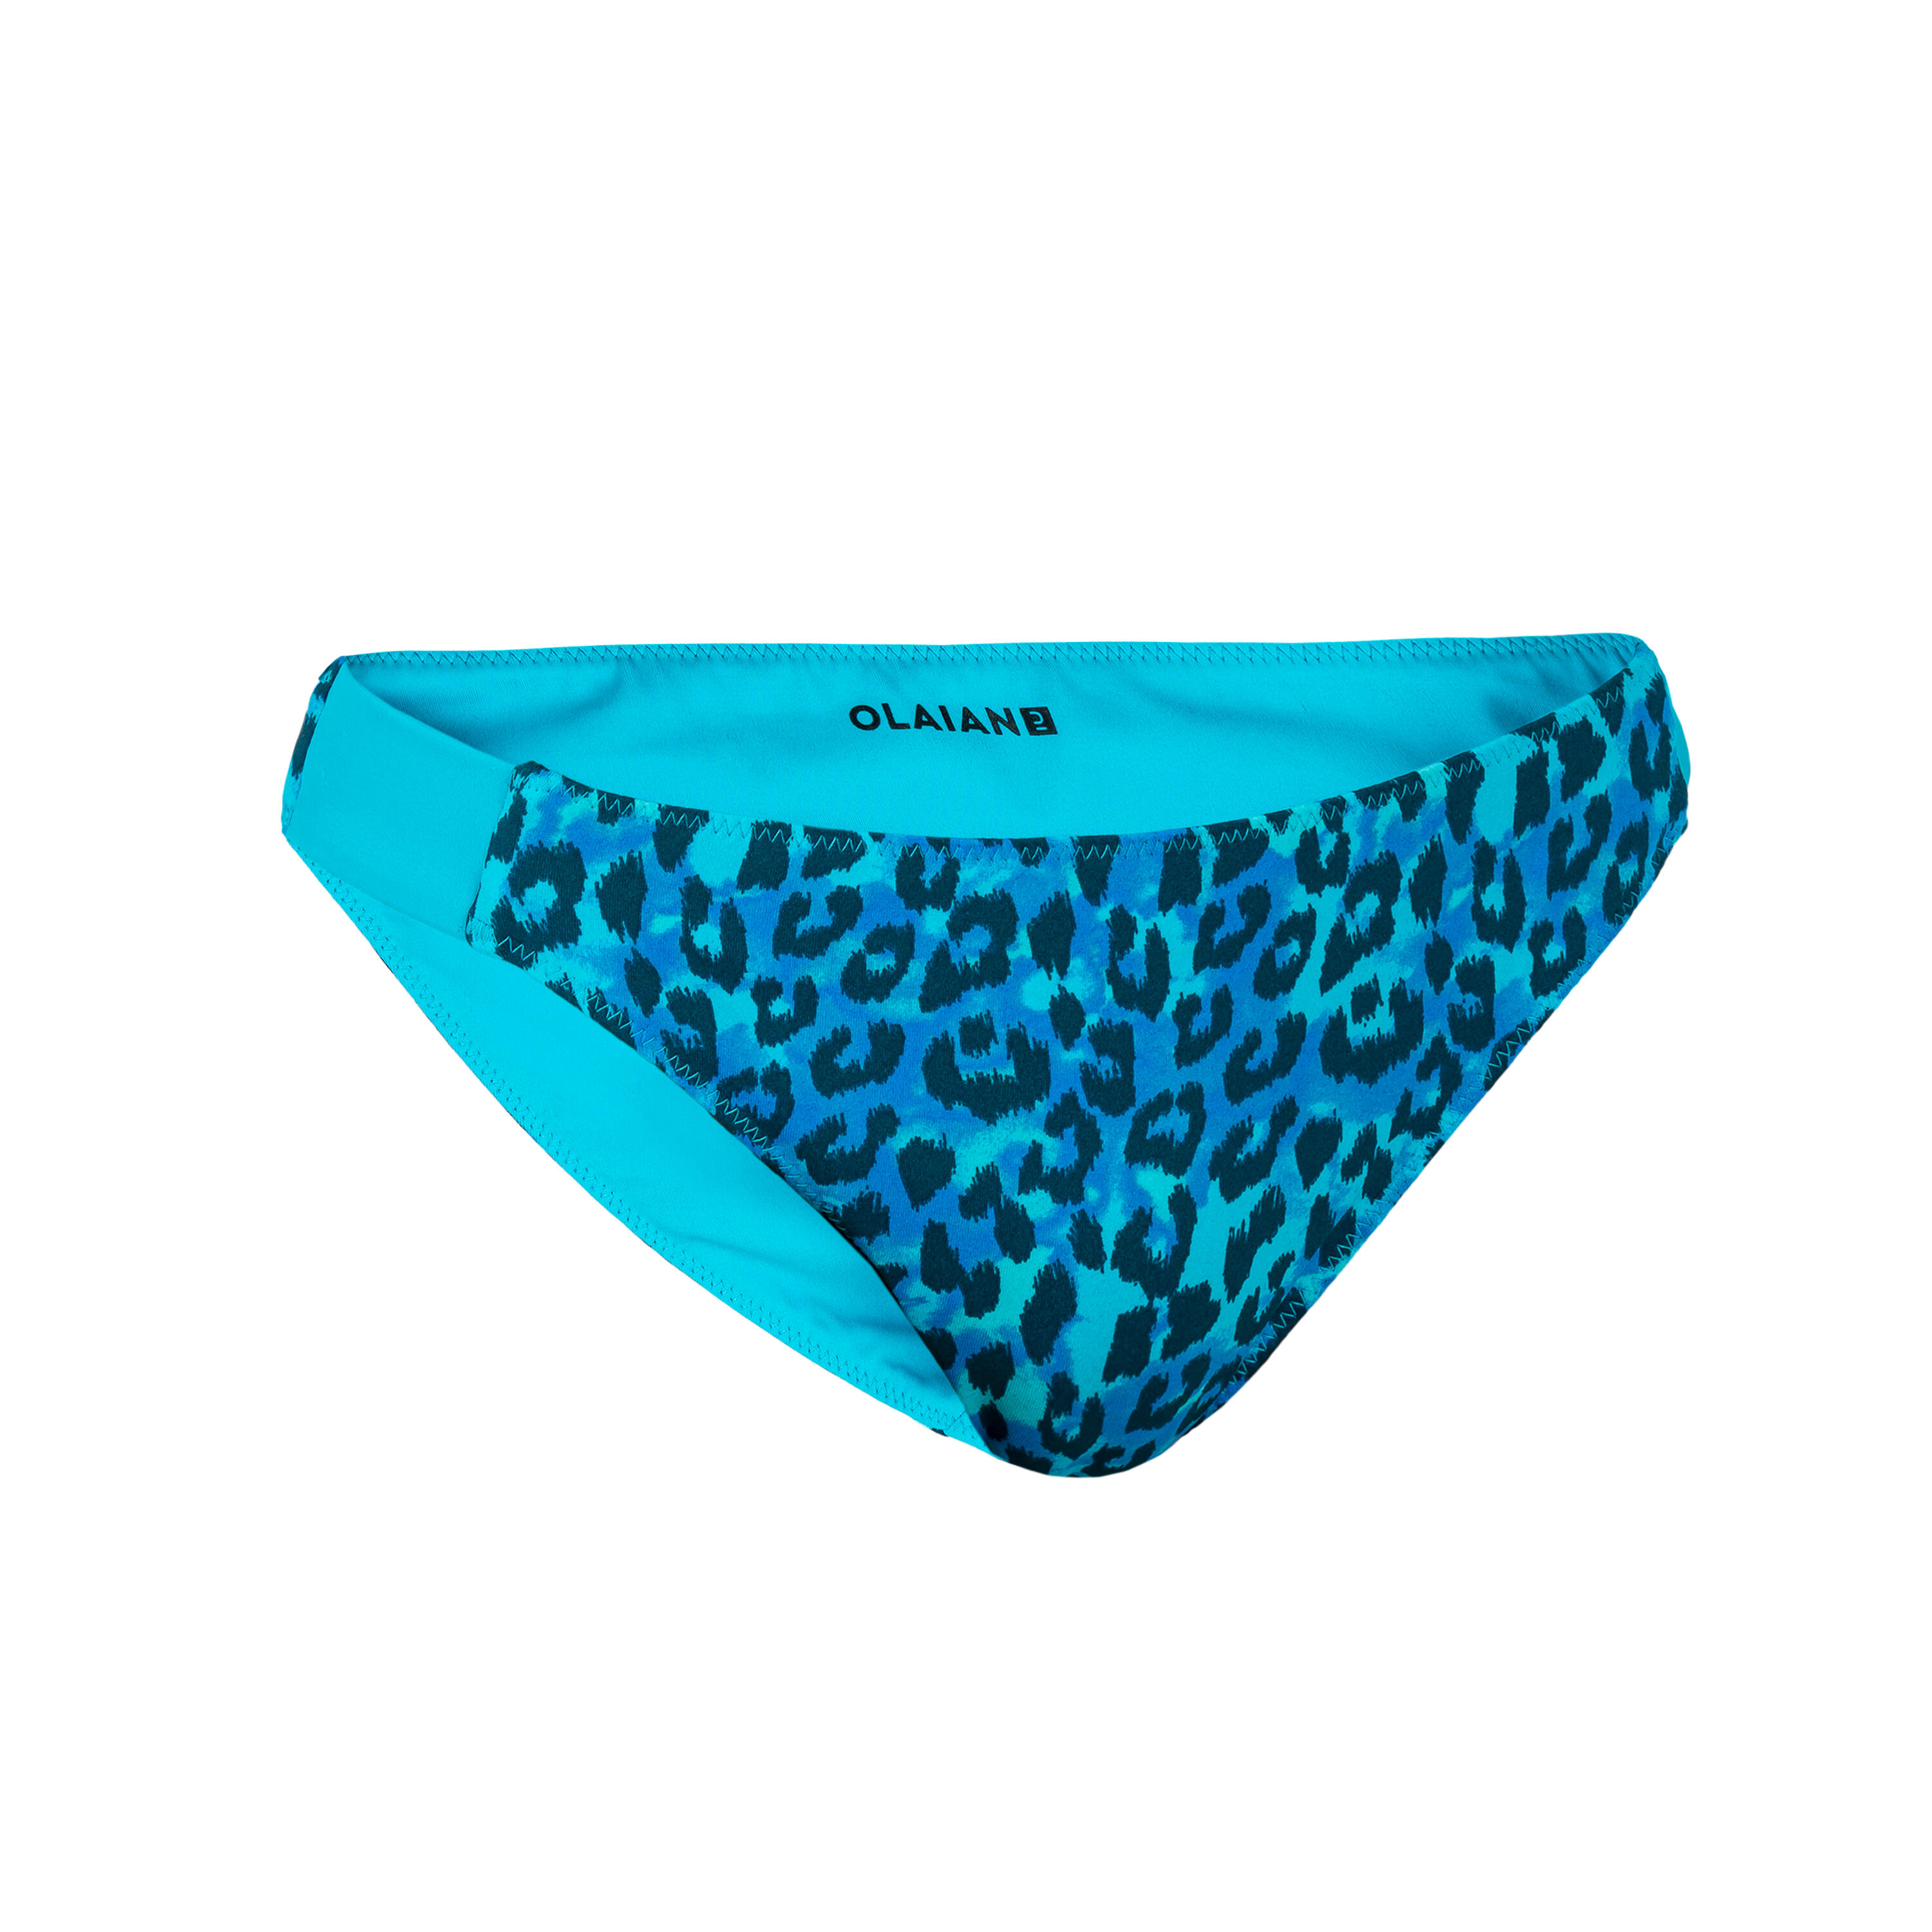 OLAIAN Girl's reversible swimsuit bottoms - 500 Bella Leopard blue